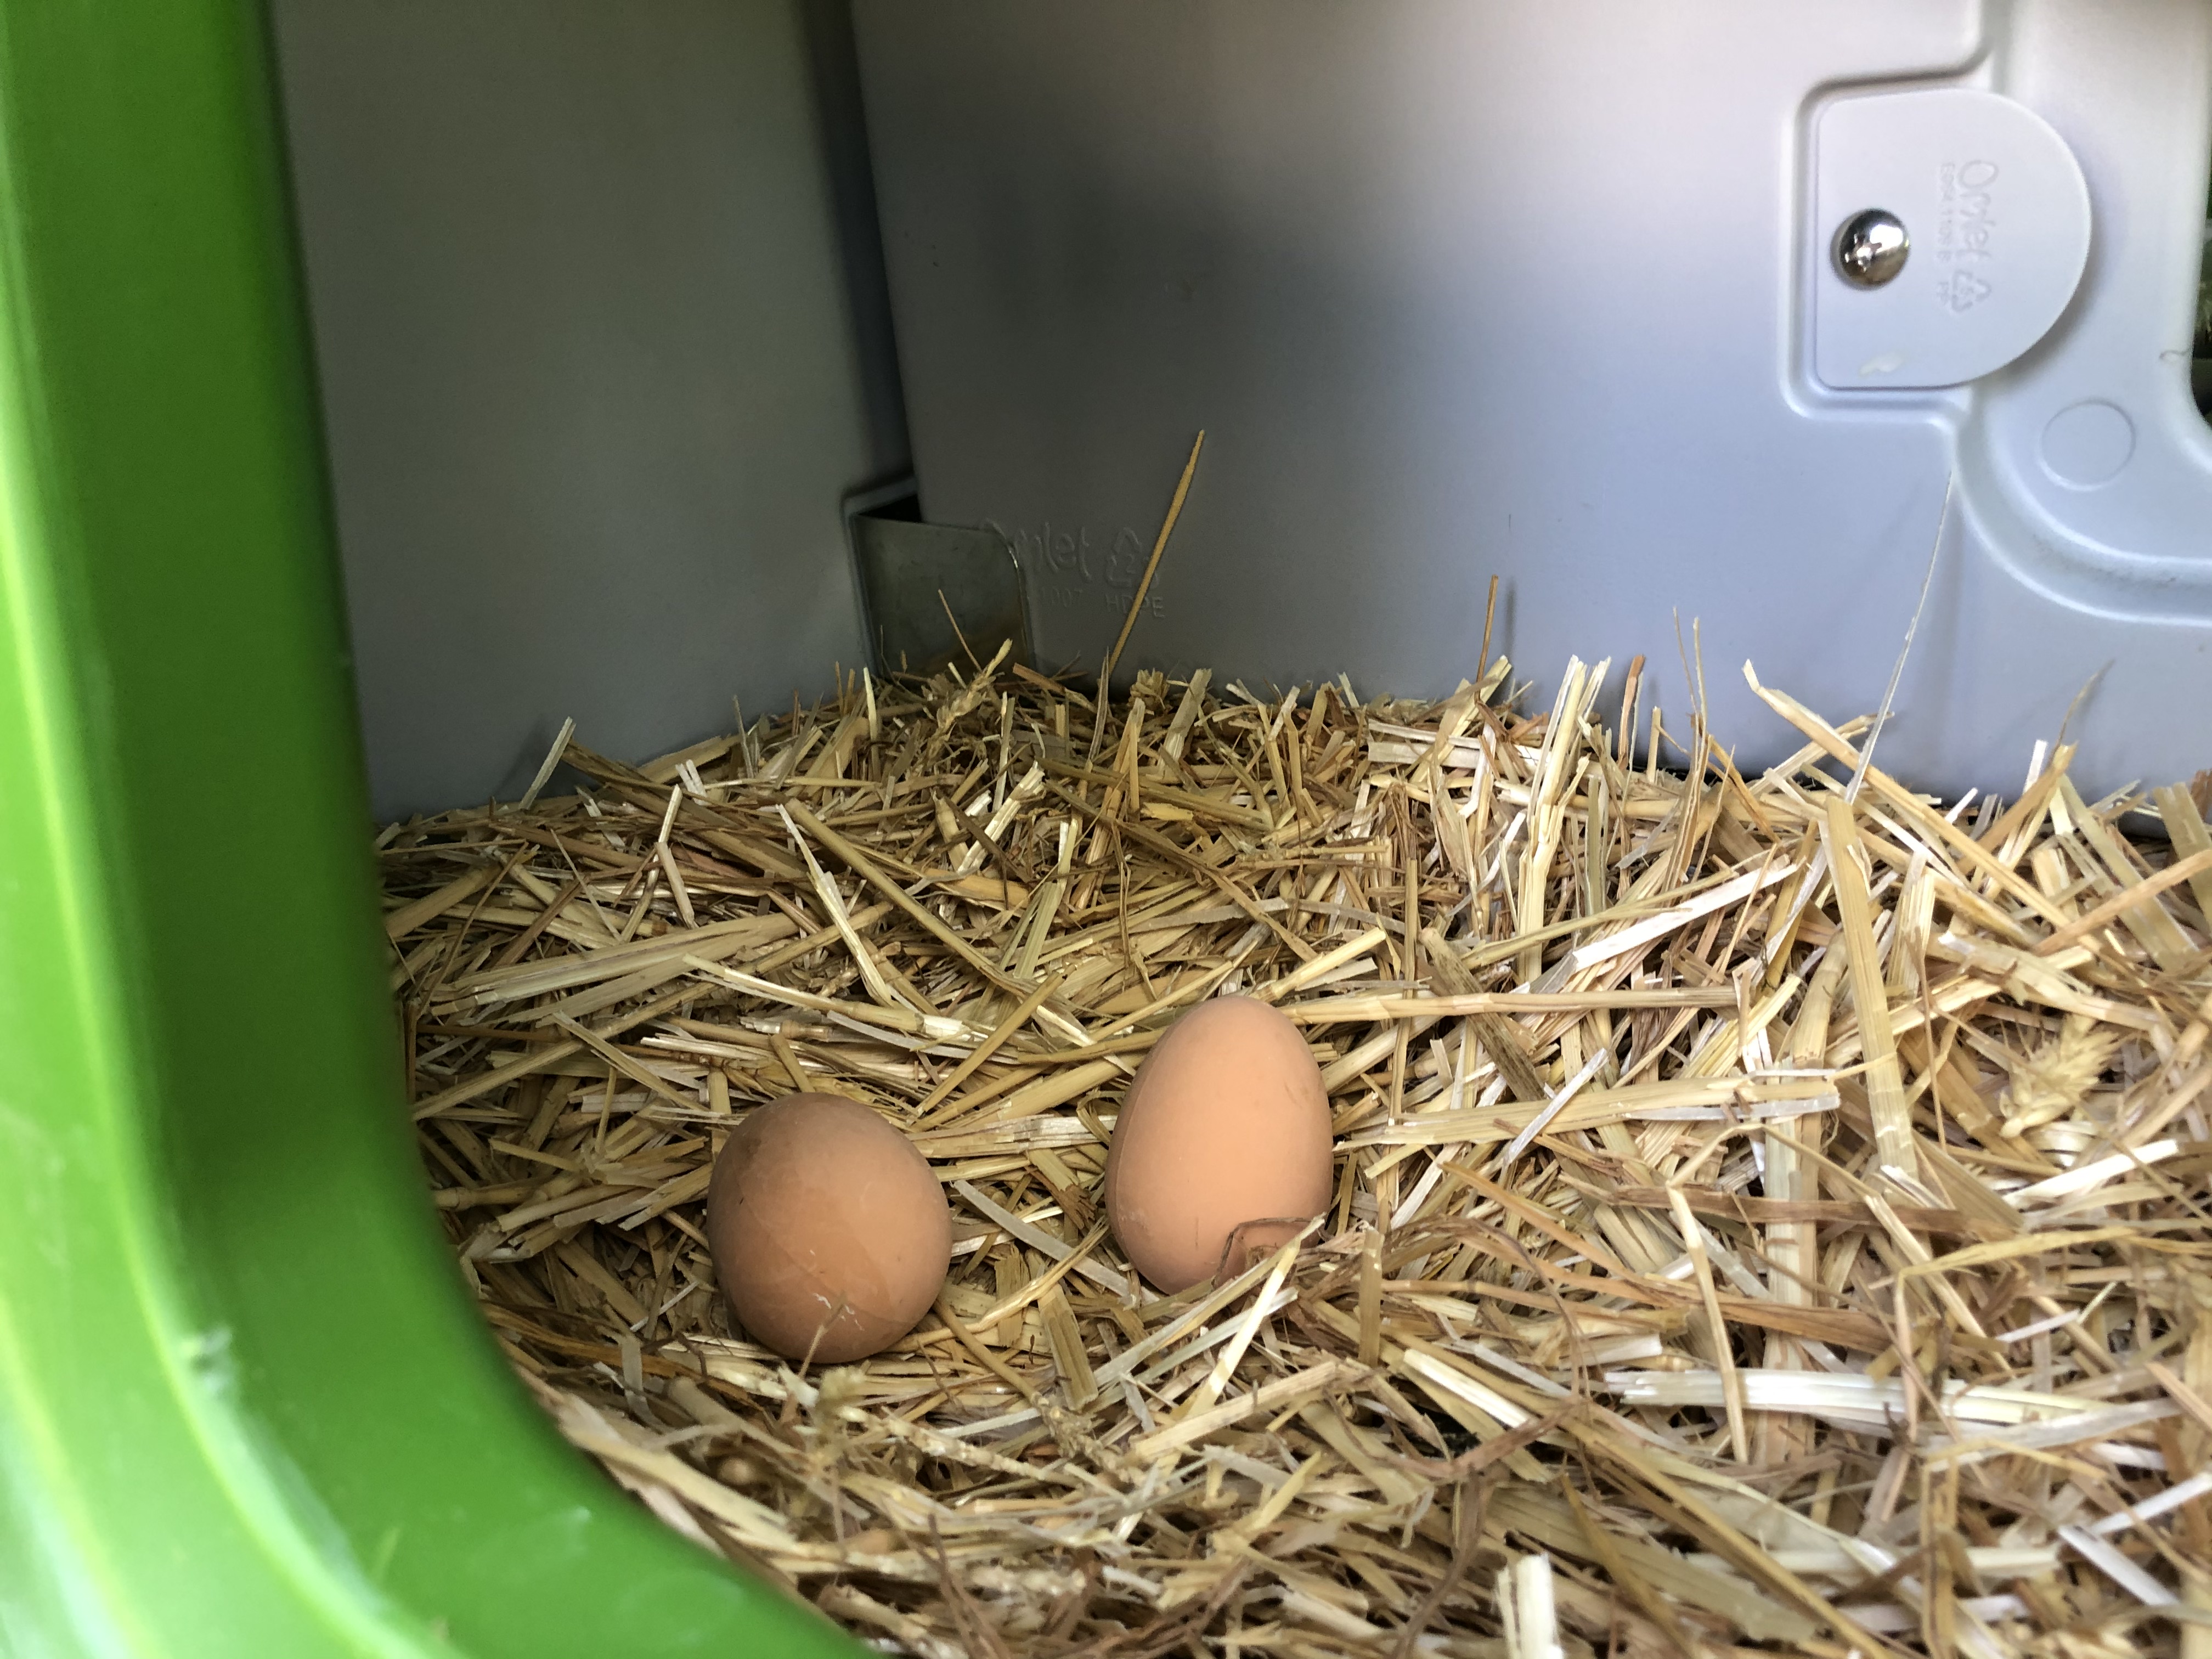 Dos huevos sentados en la caja de anidación Eglu.